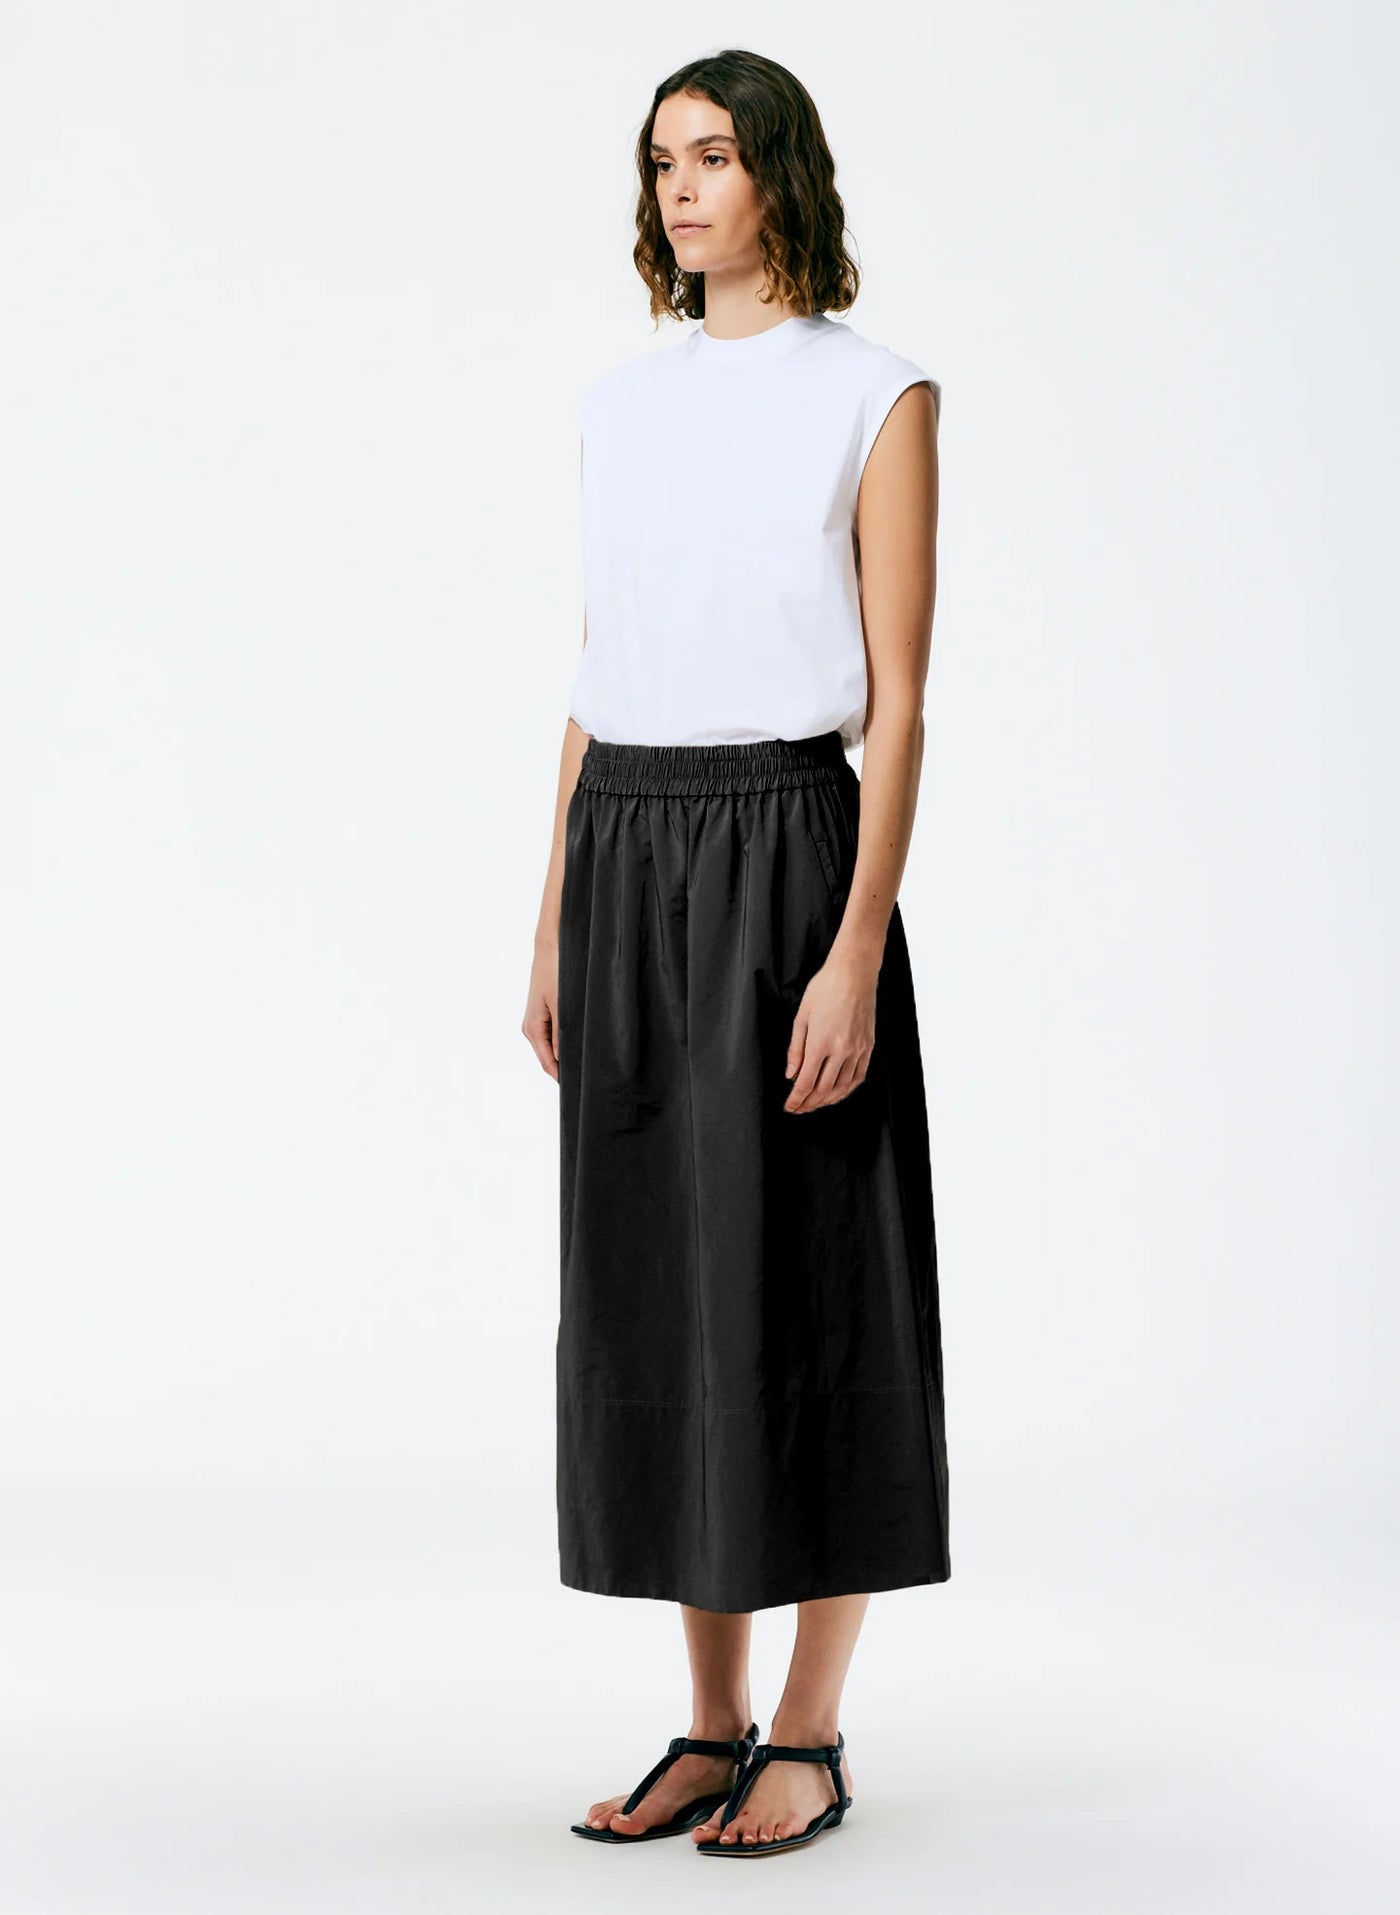 Nylon Pull On Full Skirt - More Colors Available